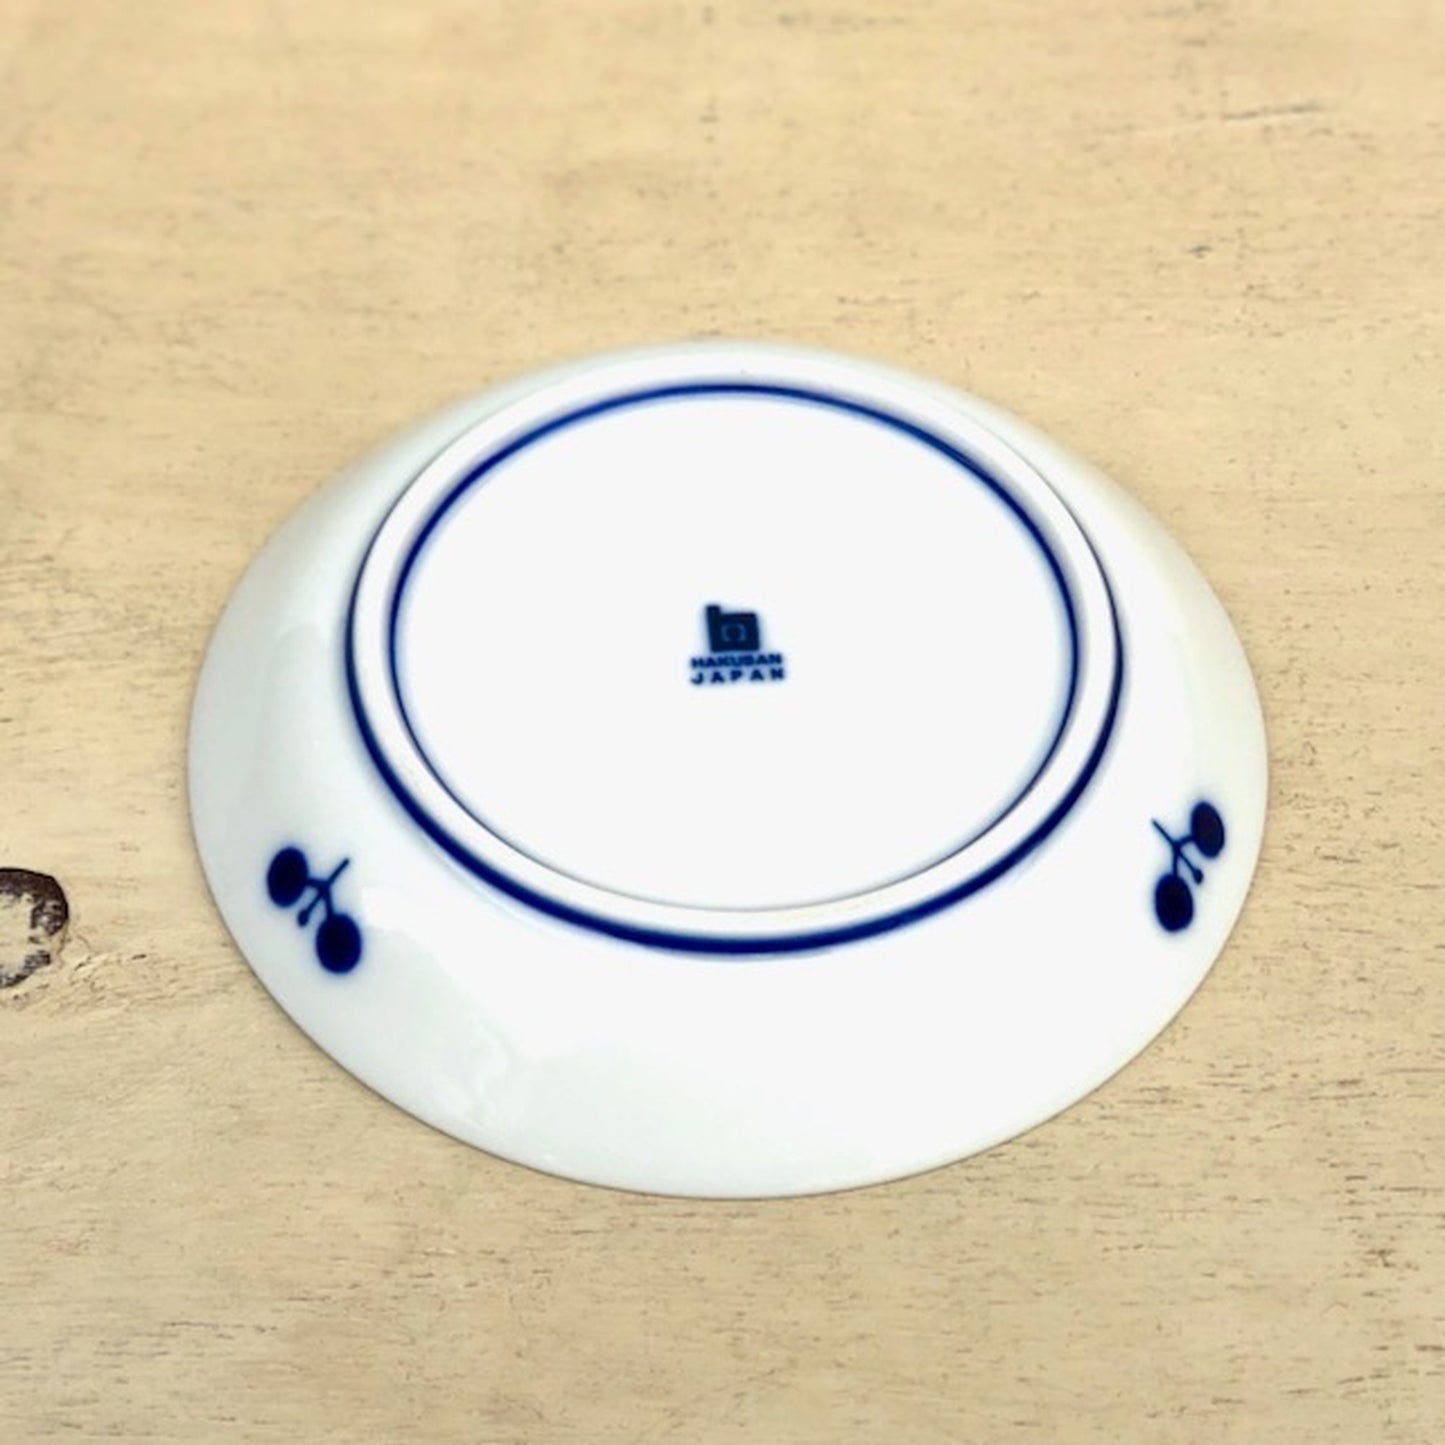 [Hasami ware] [Hakusan pottery] [Bloom] [Plate] [Wreath] [SS] [单独出售] 斯堪的纳维亚风格餐具小盘子时尚可爱